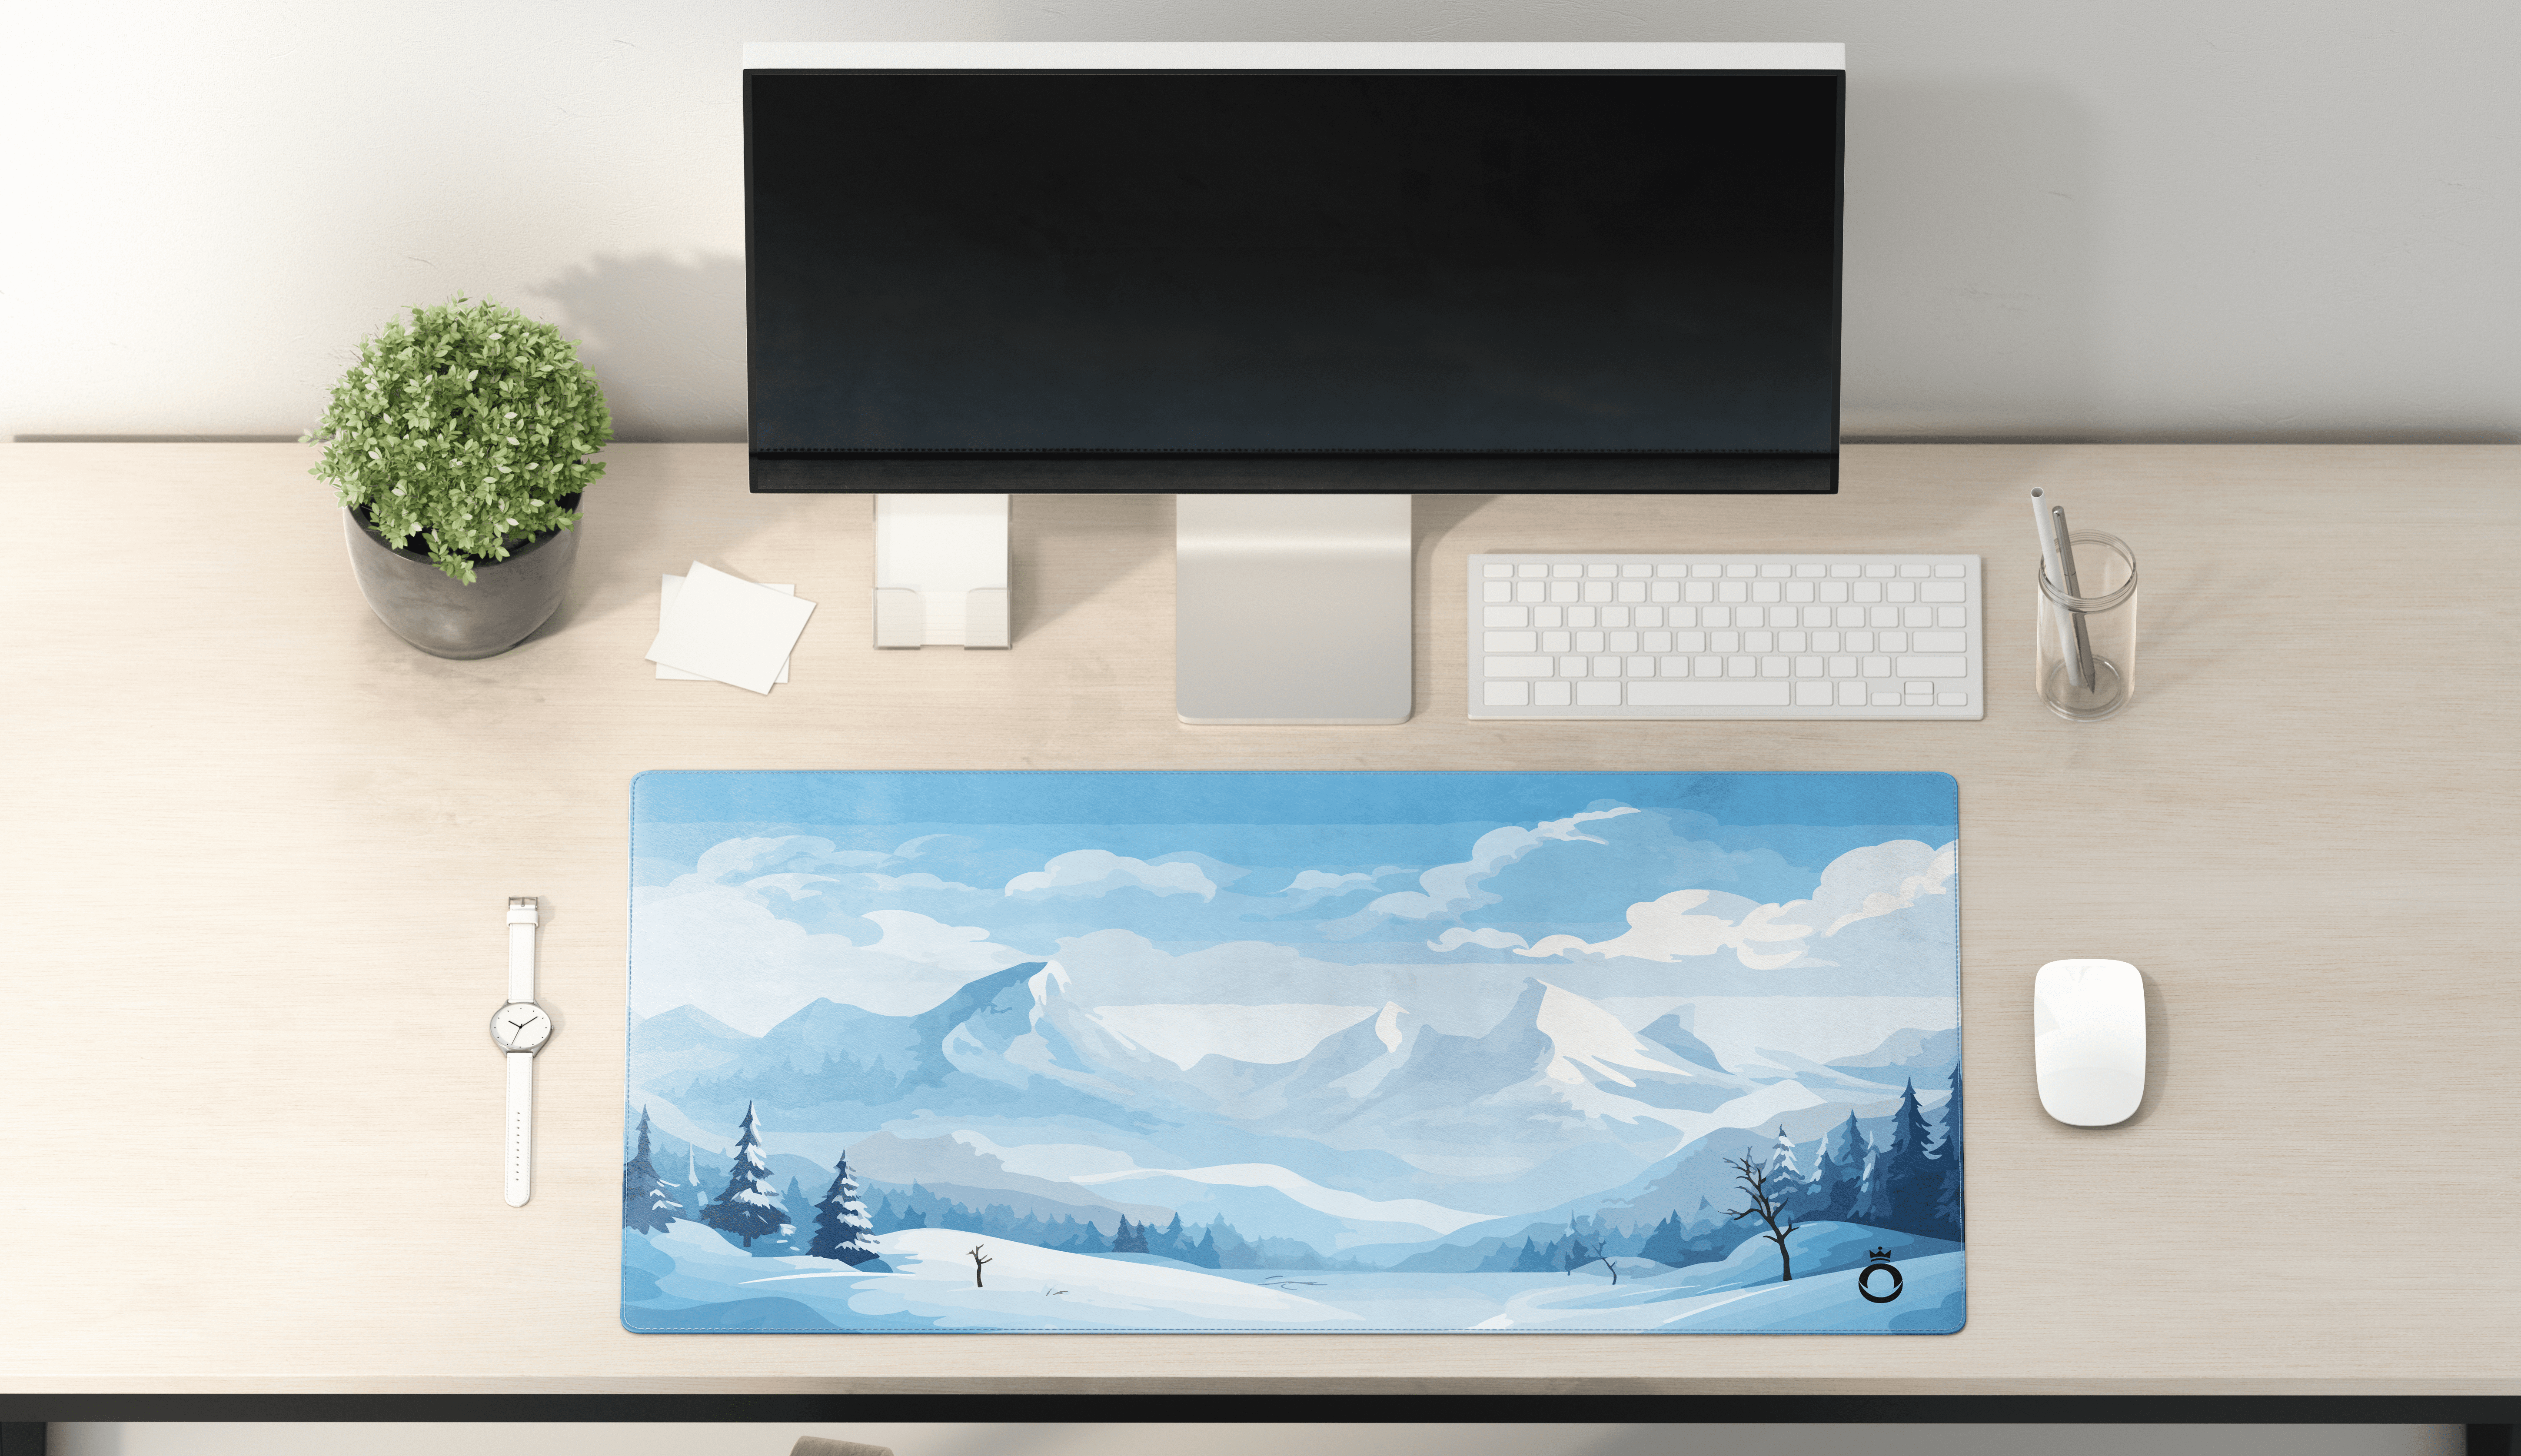 Snowy Cartoon Landscape DESK PAD